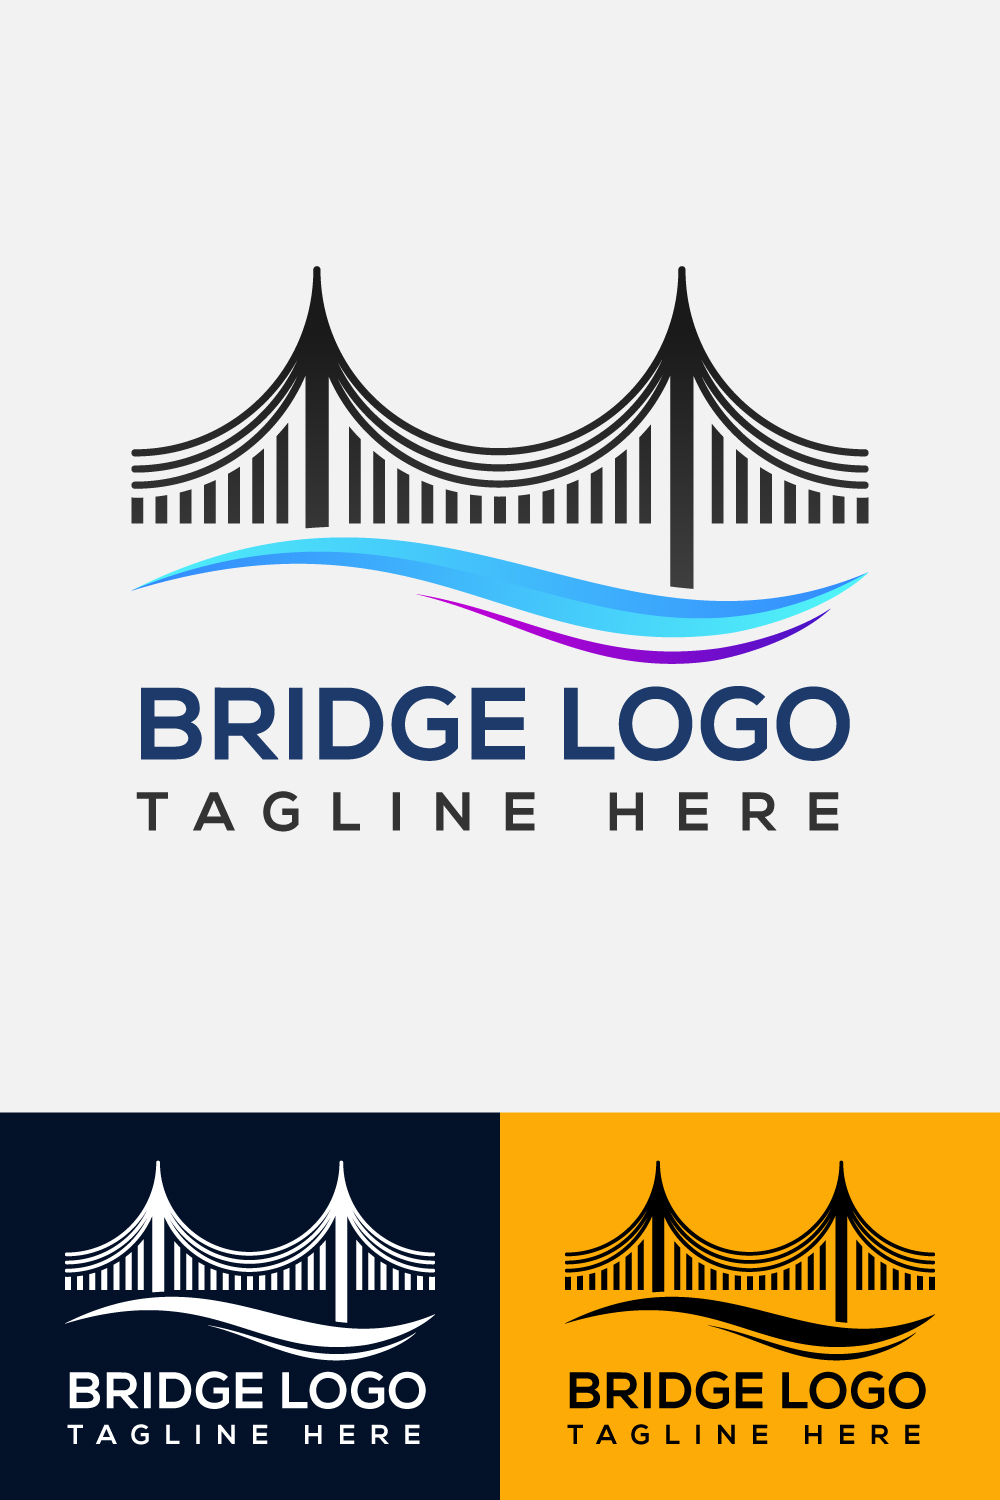 Bridge Vector Logo Template for Construction Business Pinterest collage image.